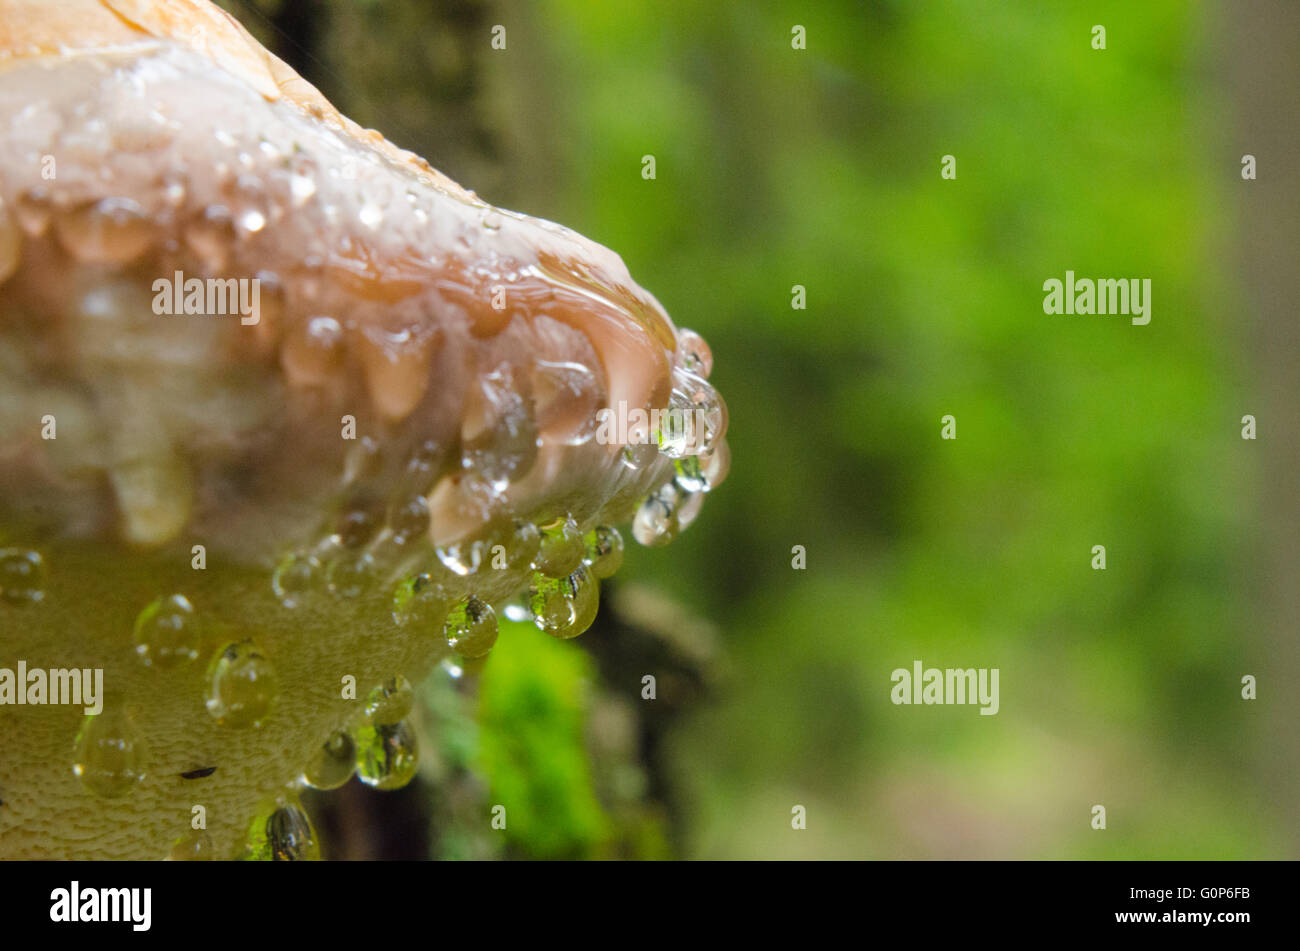 Water drops on a mushroom Stock Photo